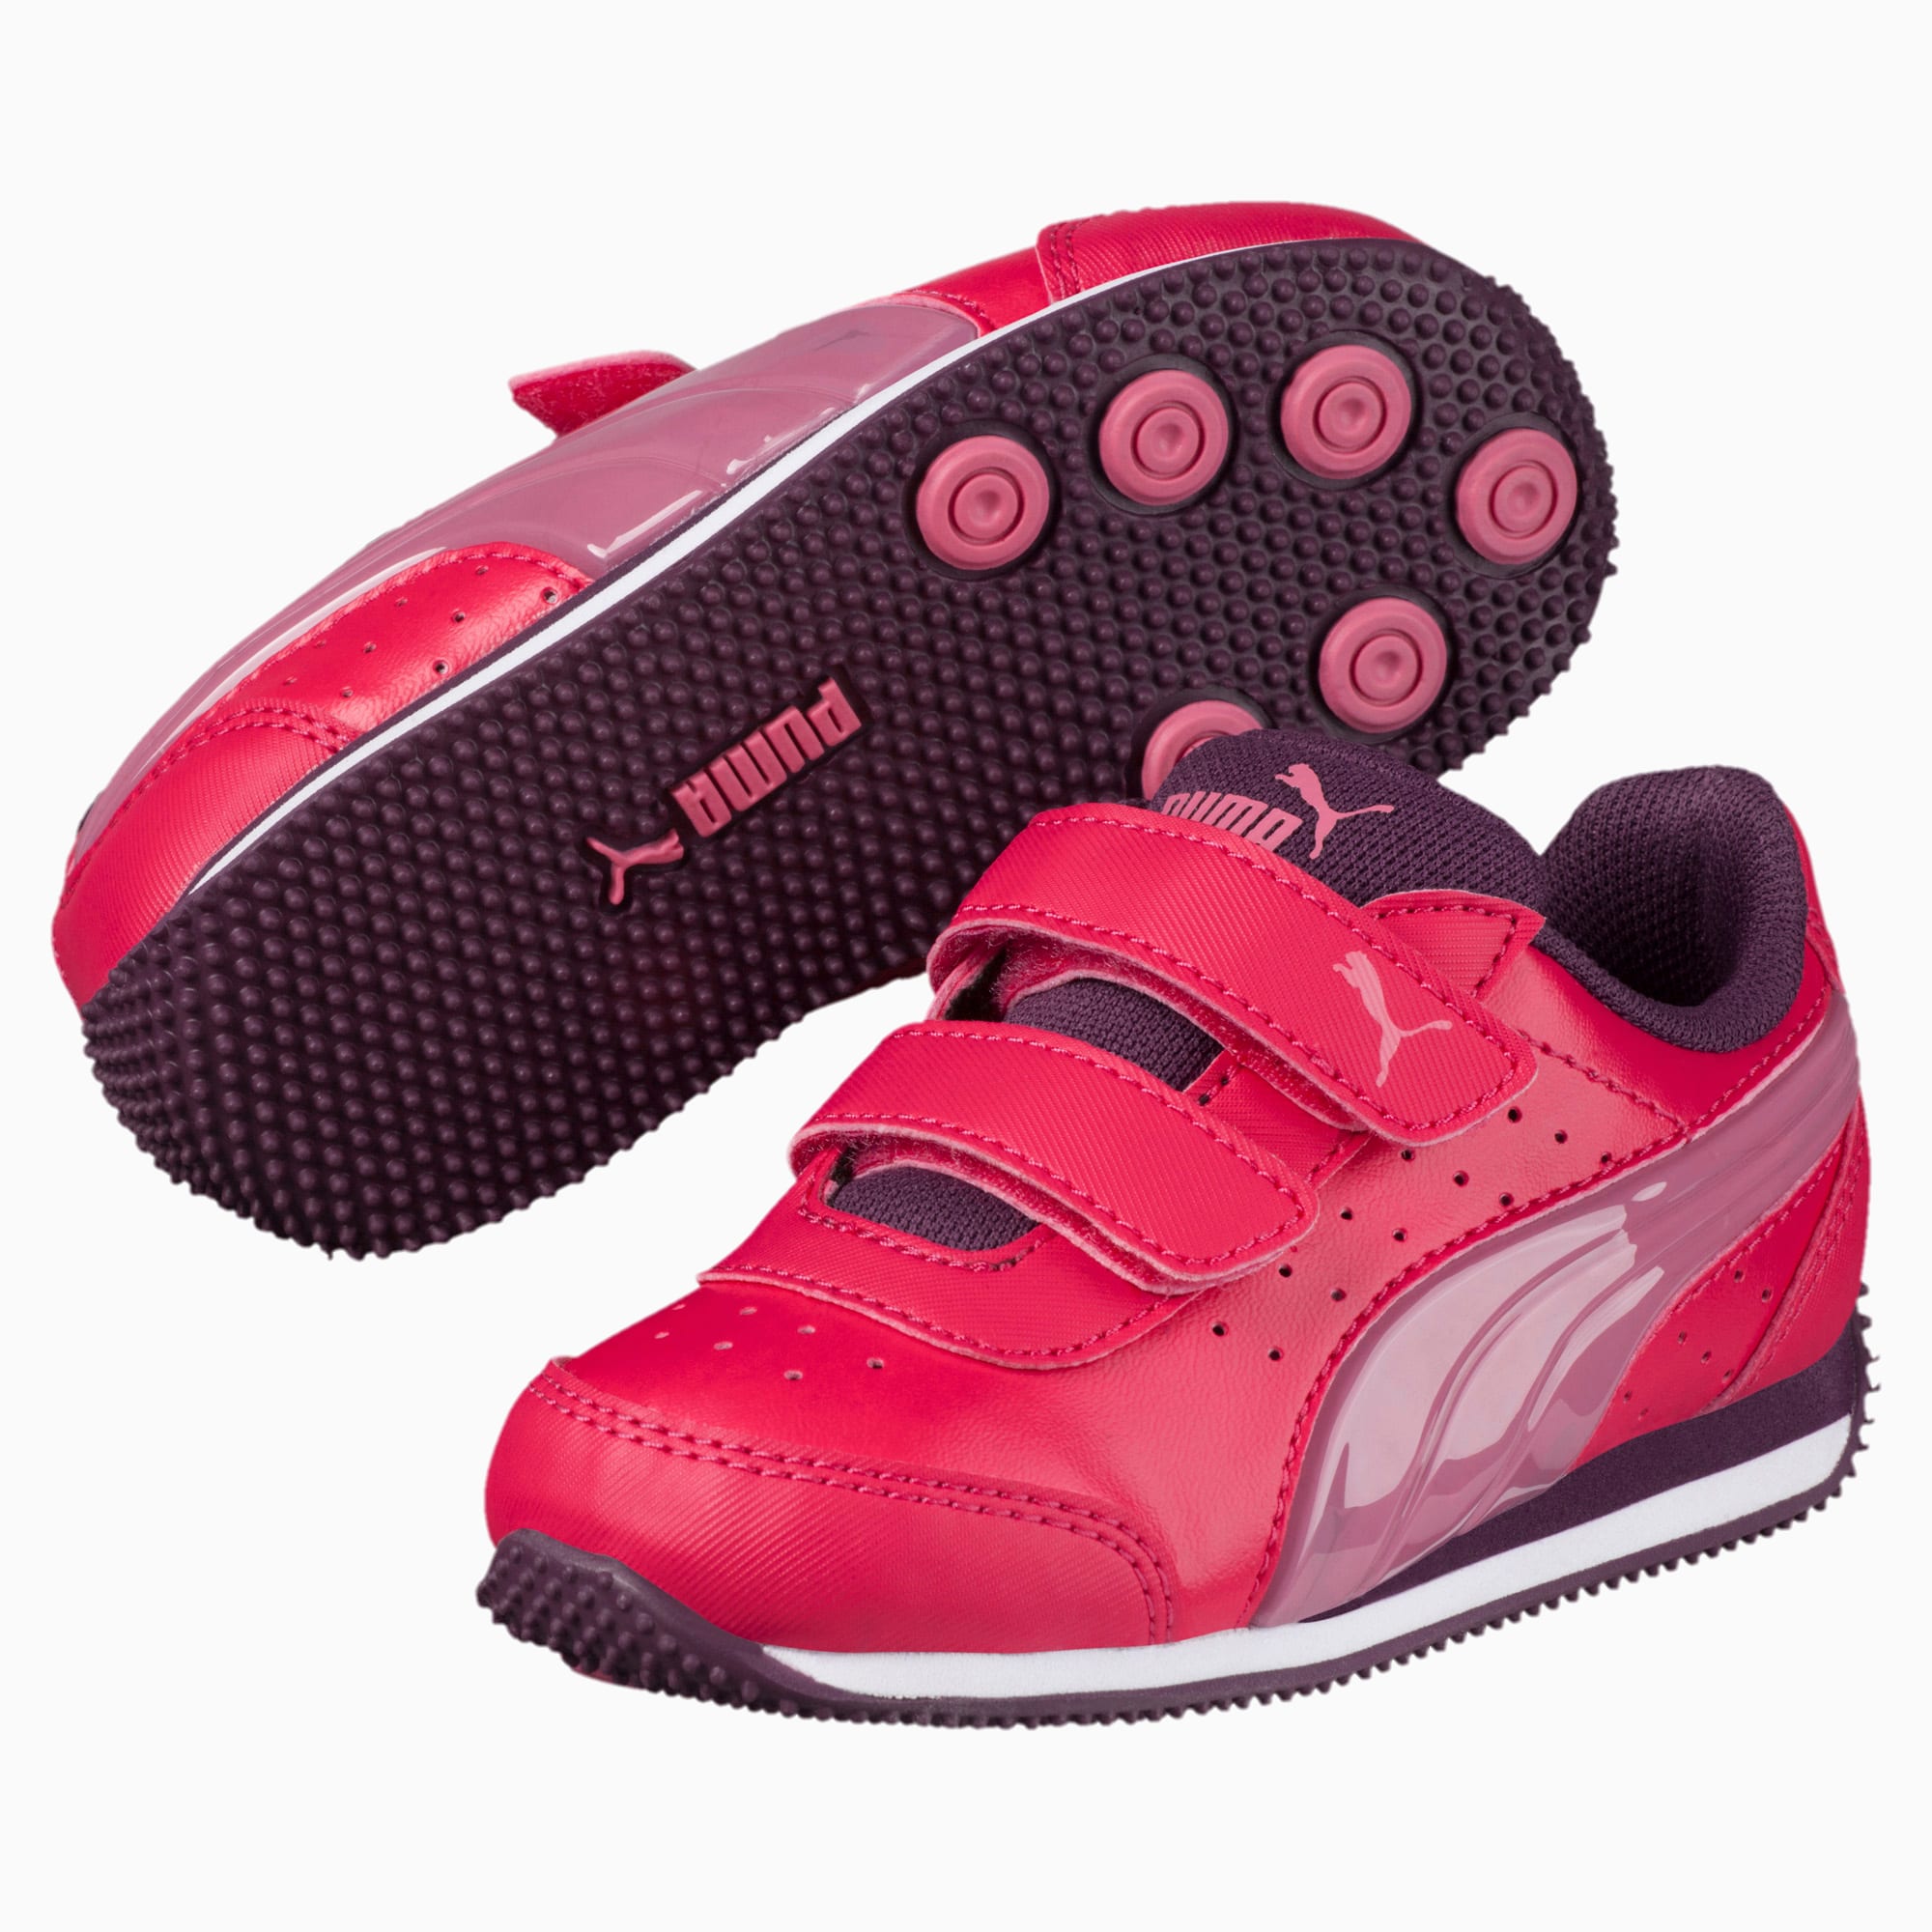 puma toddler light up shoes